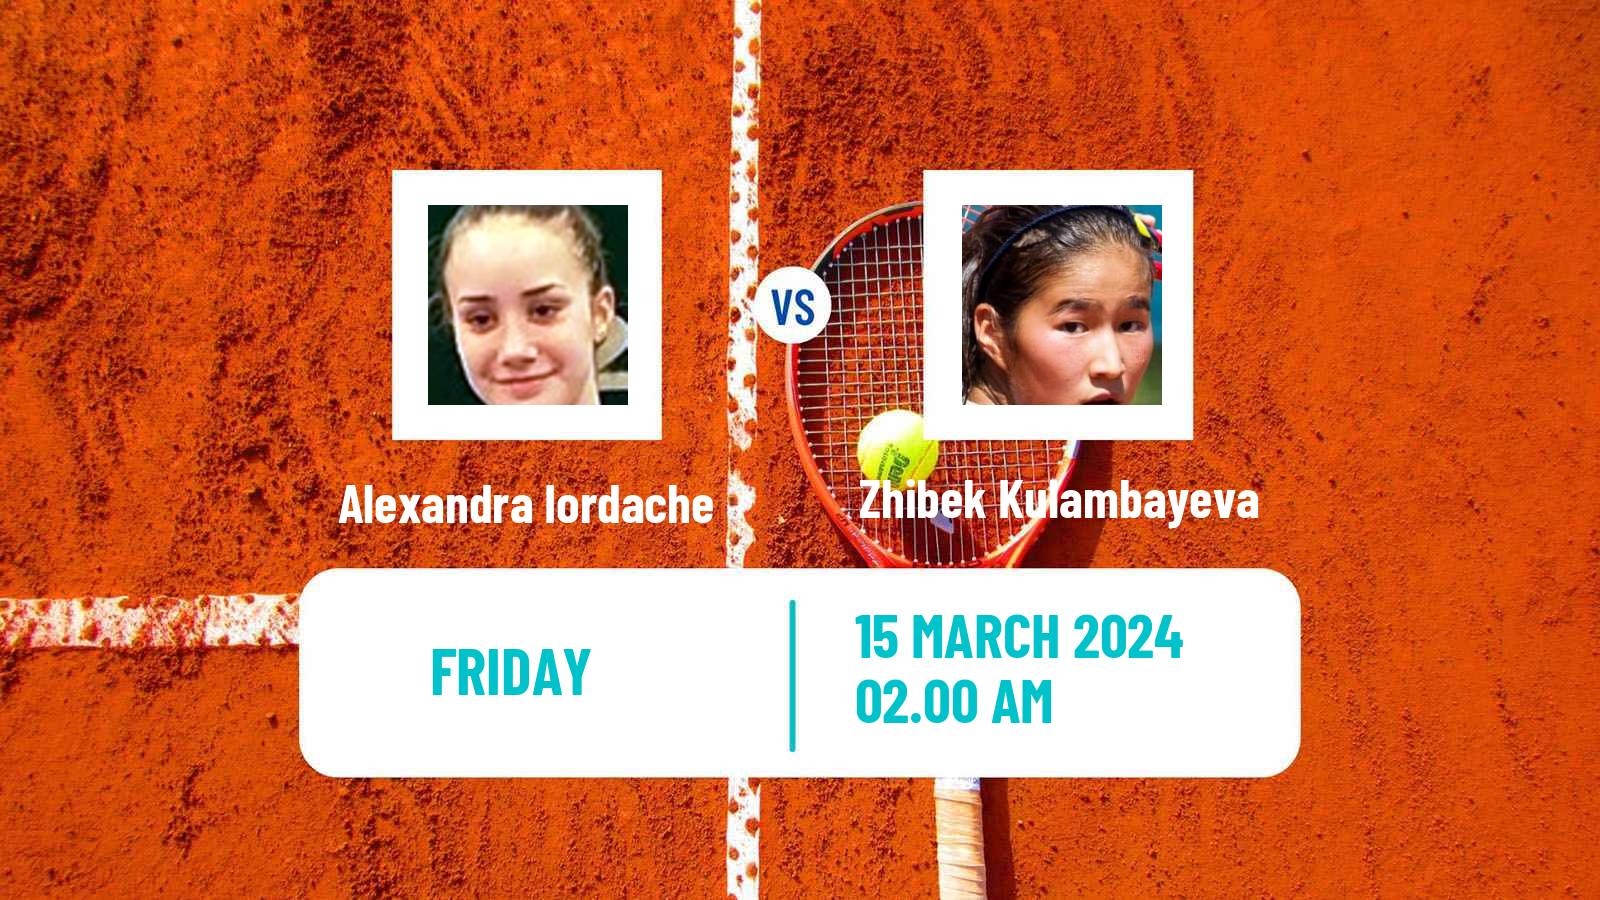 Tennis ITF W15 Karaganda 2 Women Alexandra Iordache - Zhibek Kulambayeva